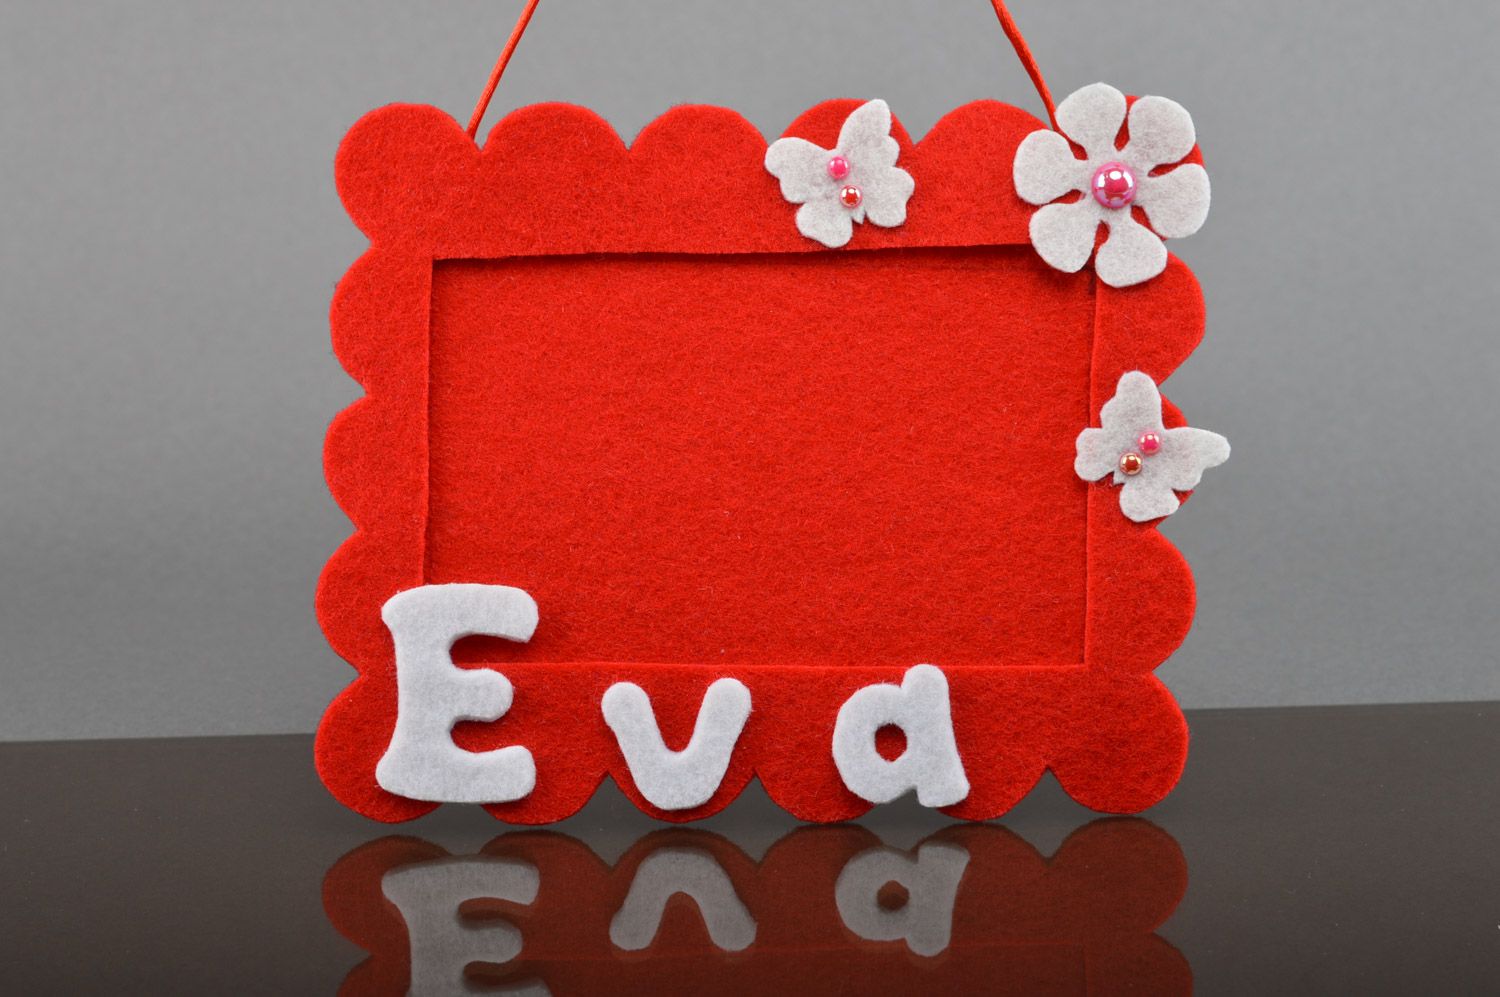 Настенная рамка для фото из красного фетра с именем ребенка Ева ручная работа фото 1